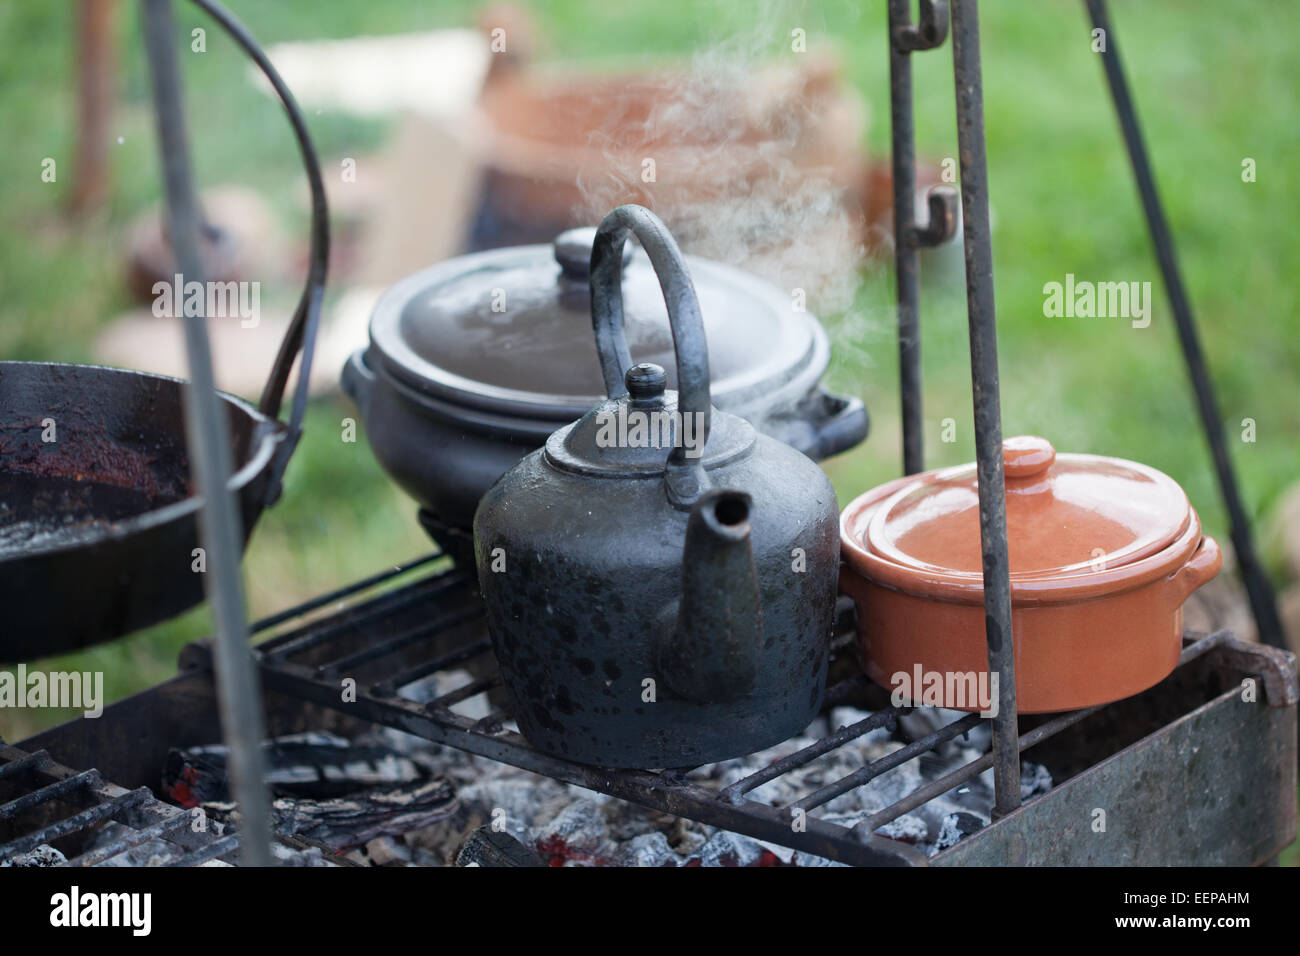 https://c8.alamy.com/comp/EEPAHM/campfire-cooking-using-traditional-medieval-methods-EEPAHM.jpg